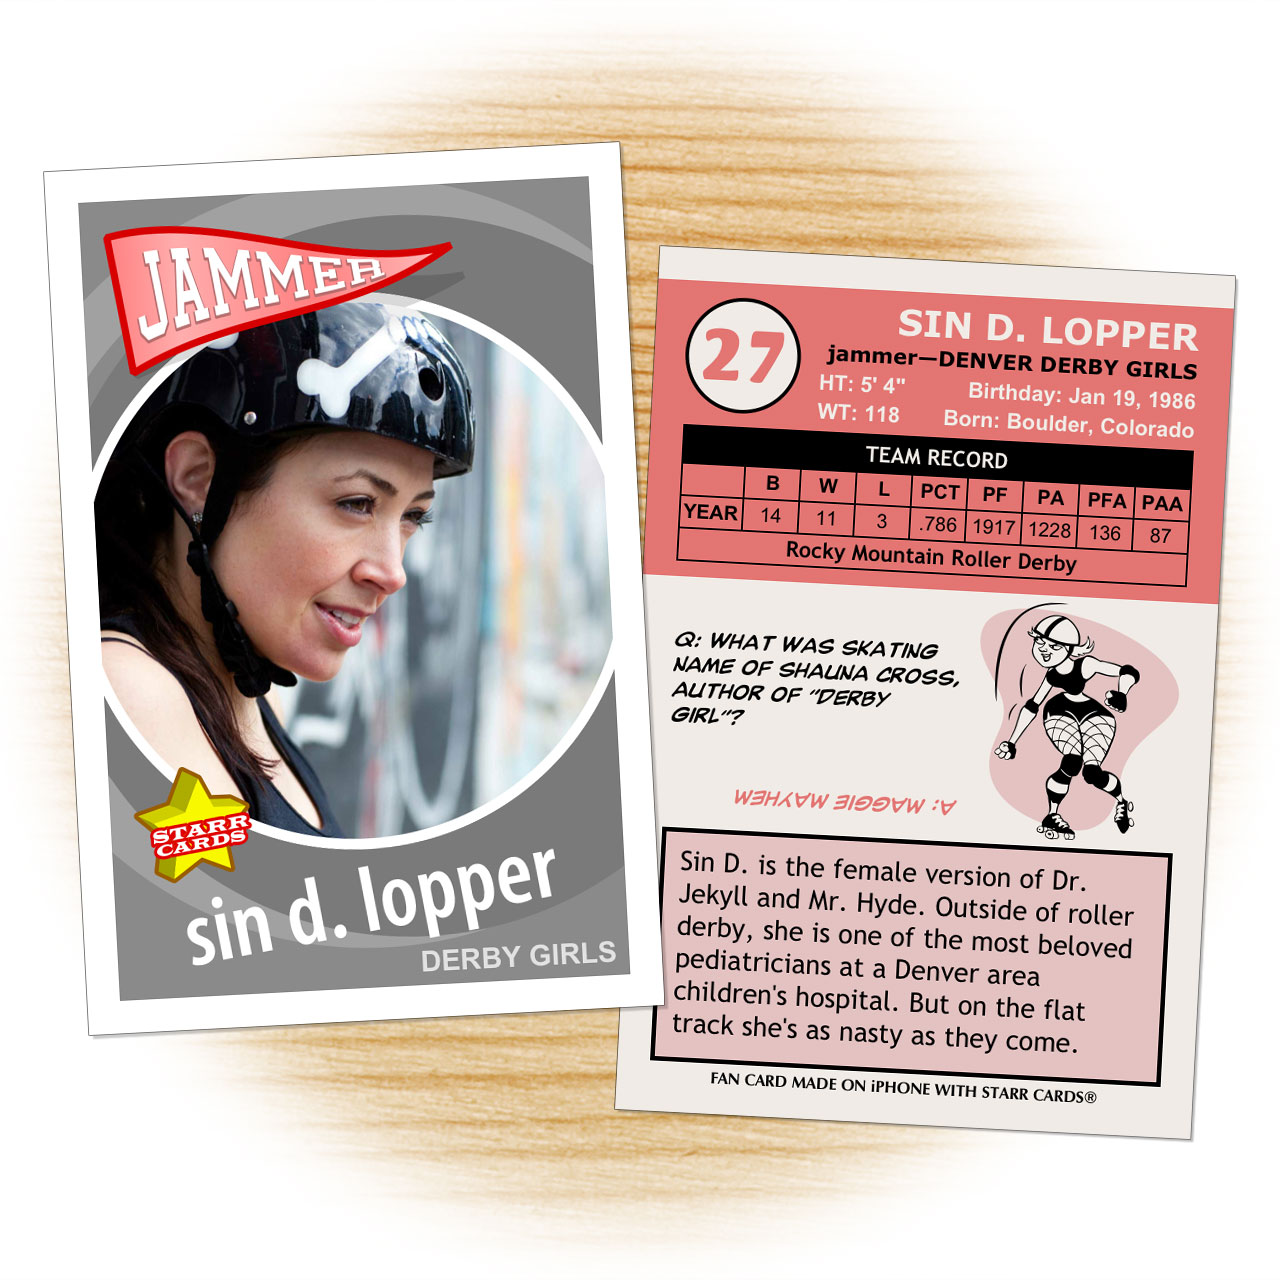 Roller derby card template from Starr Cards Roller Derby Card Maker.